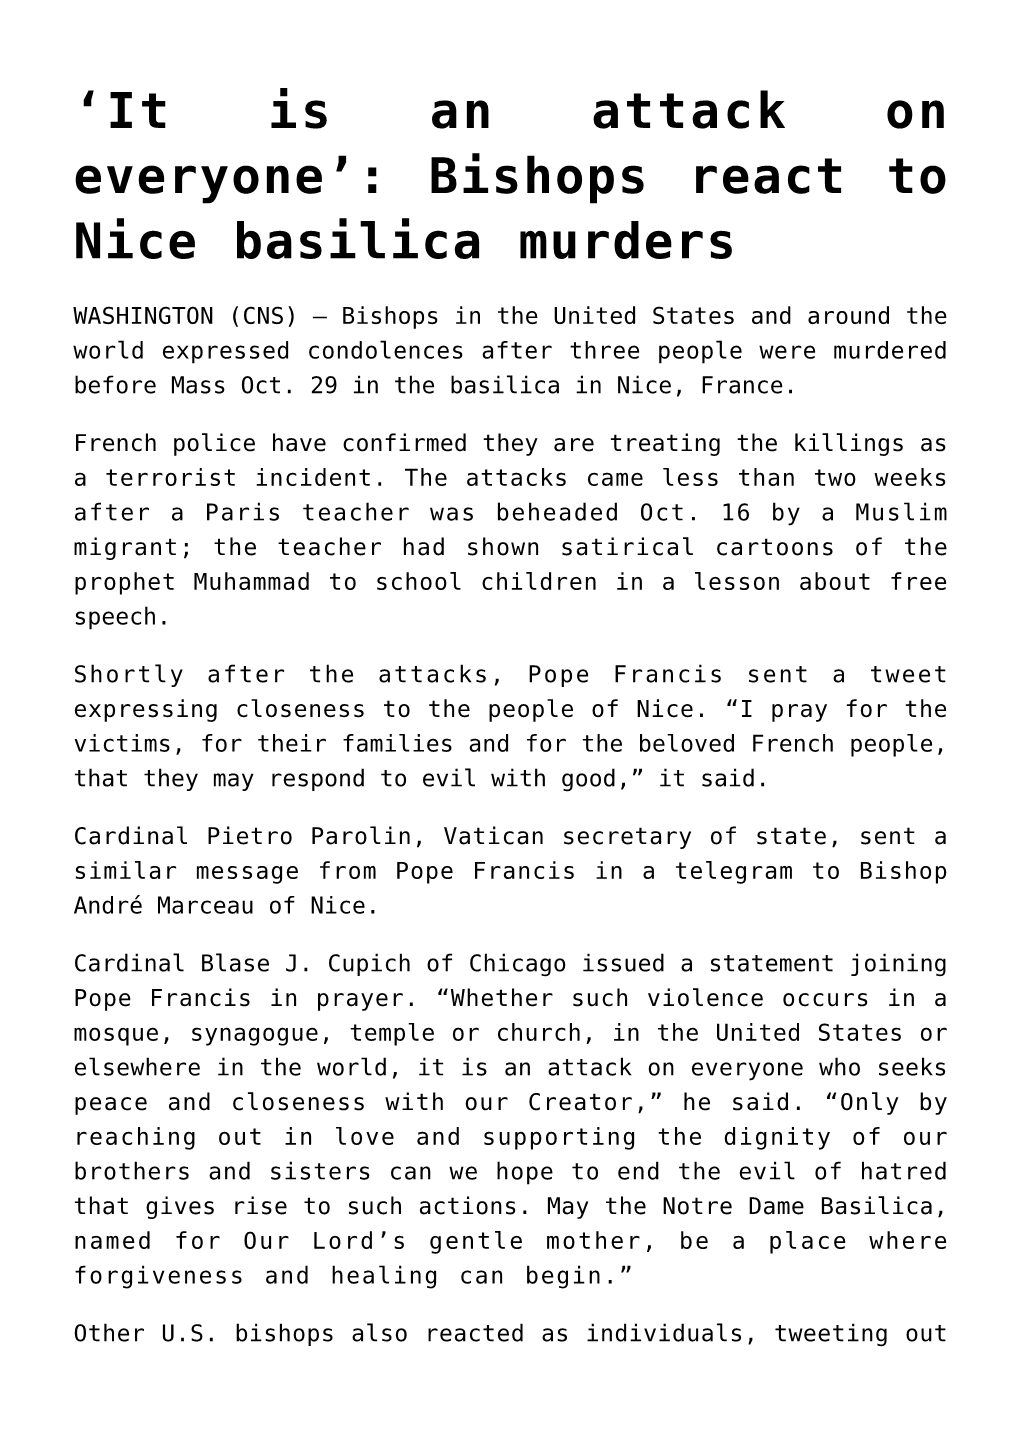 Bishops React to Nice Basilica Murders